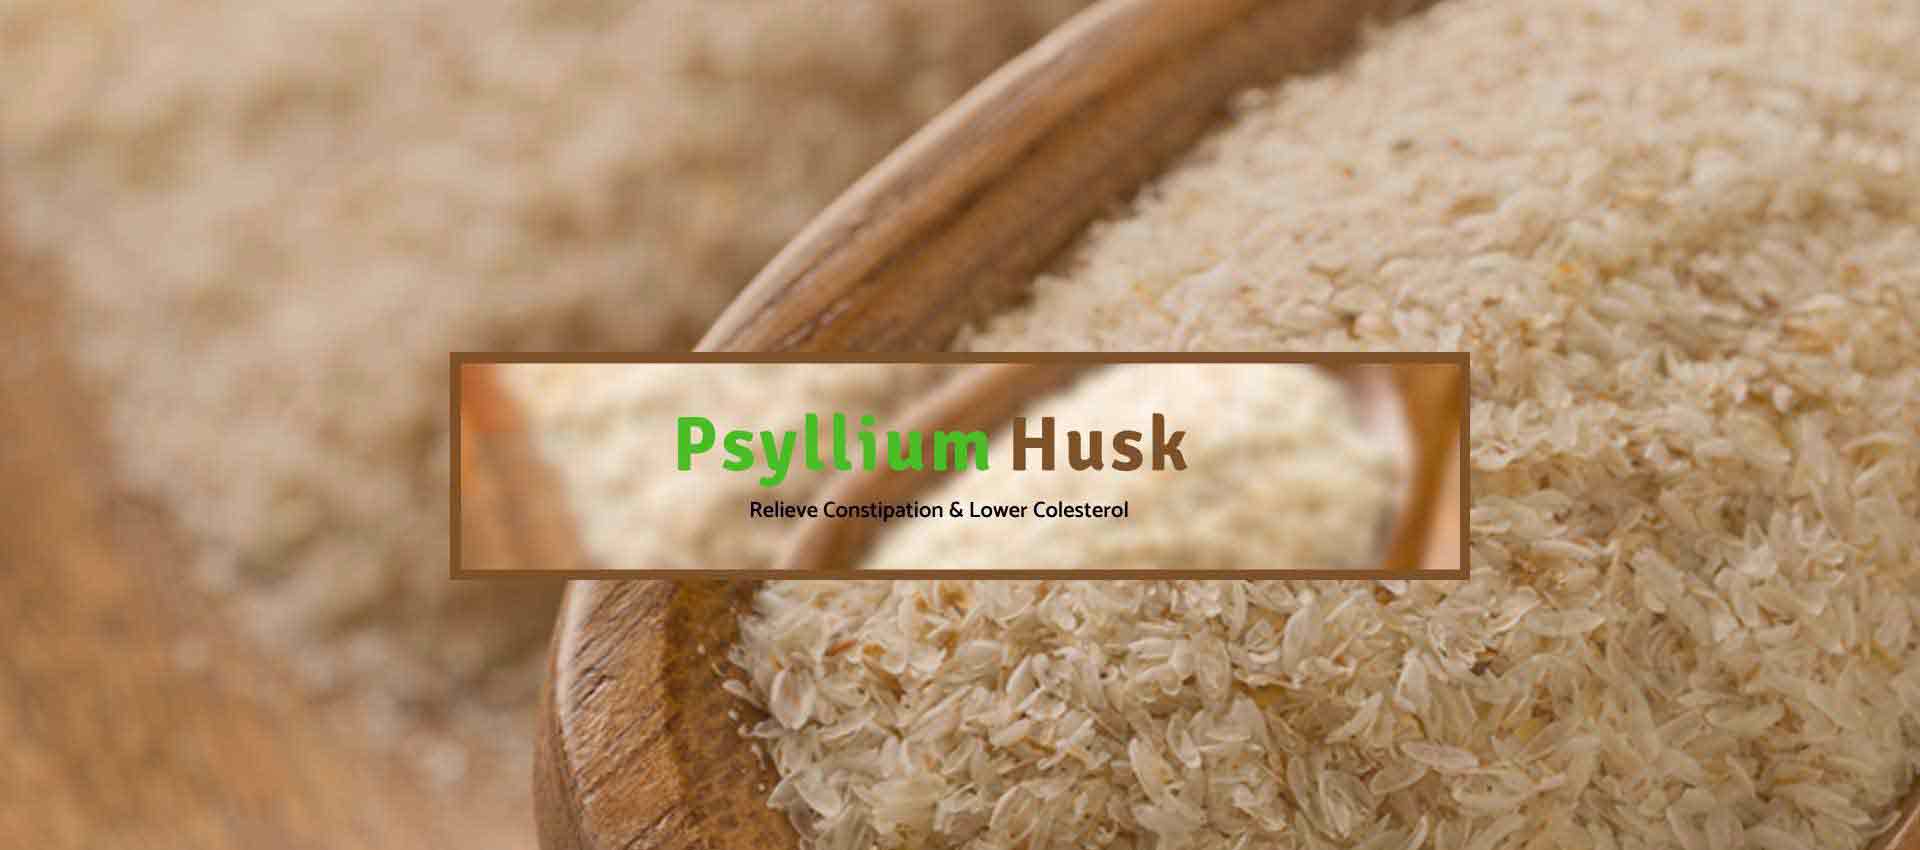 Psyllium Husk Manufacturers in Andhra Pradesh